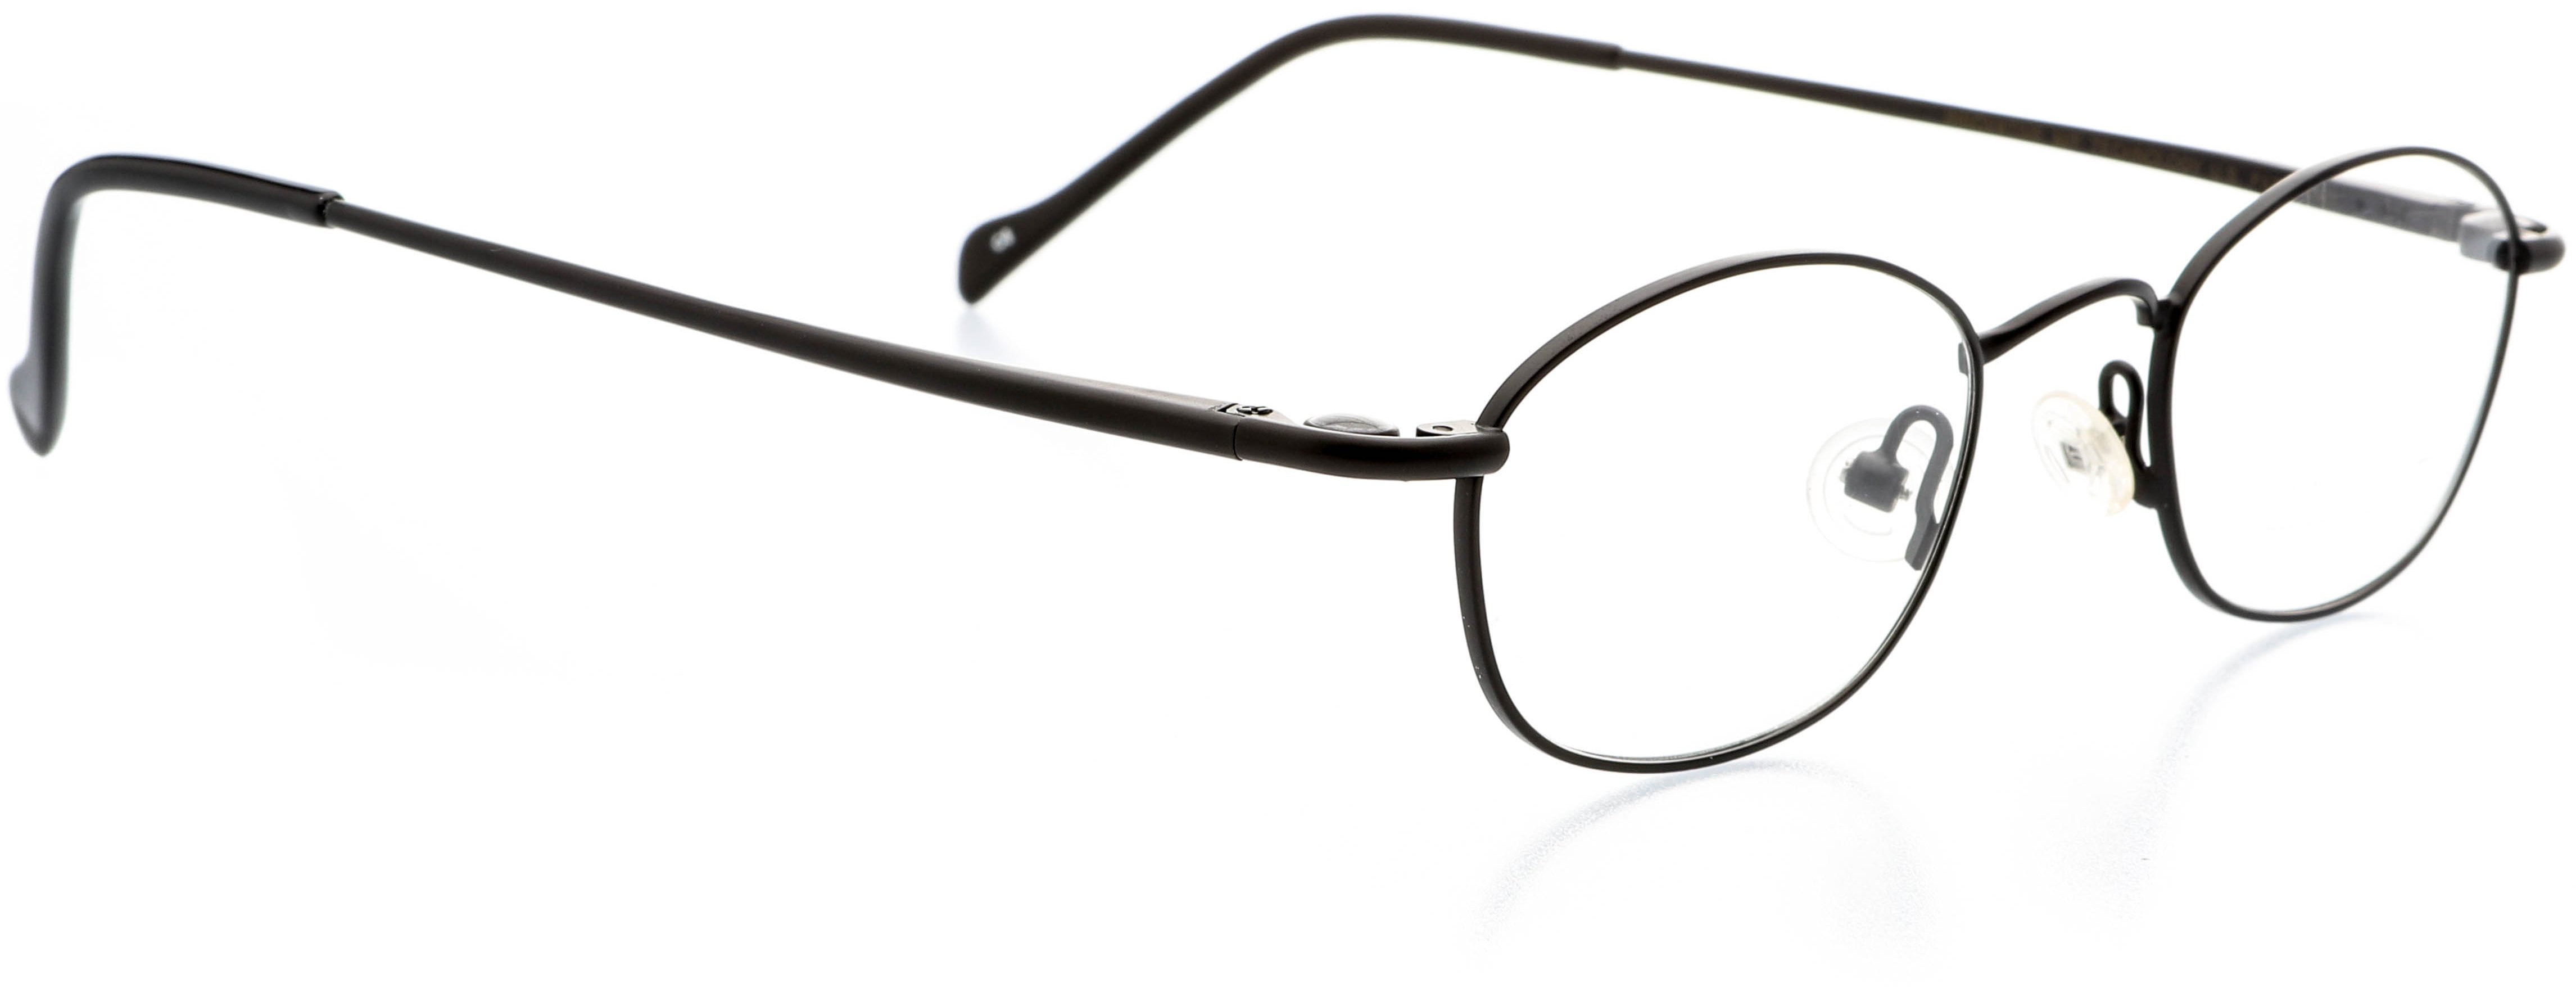 Optical Eyewear - Oval Shape, Metal Full Rim Frame - Prescription